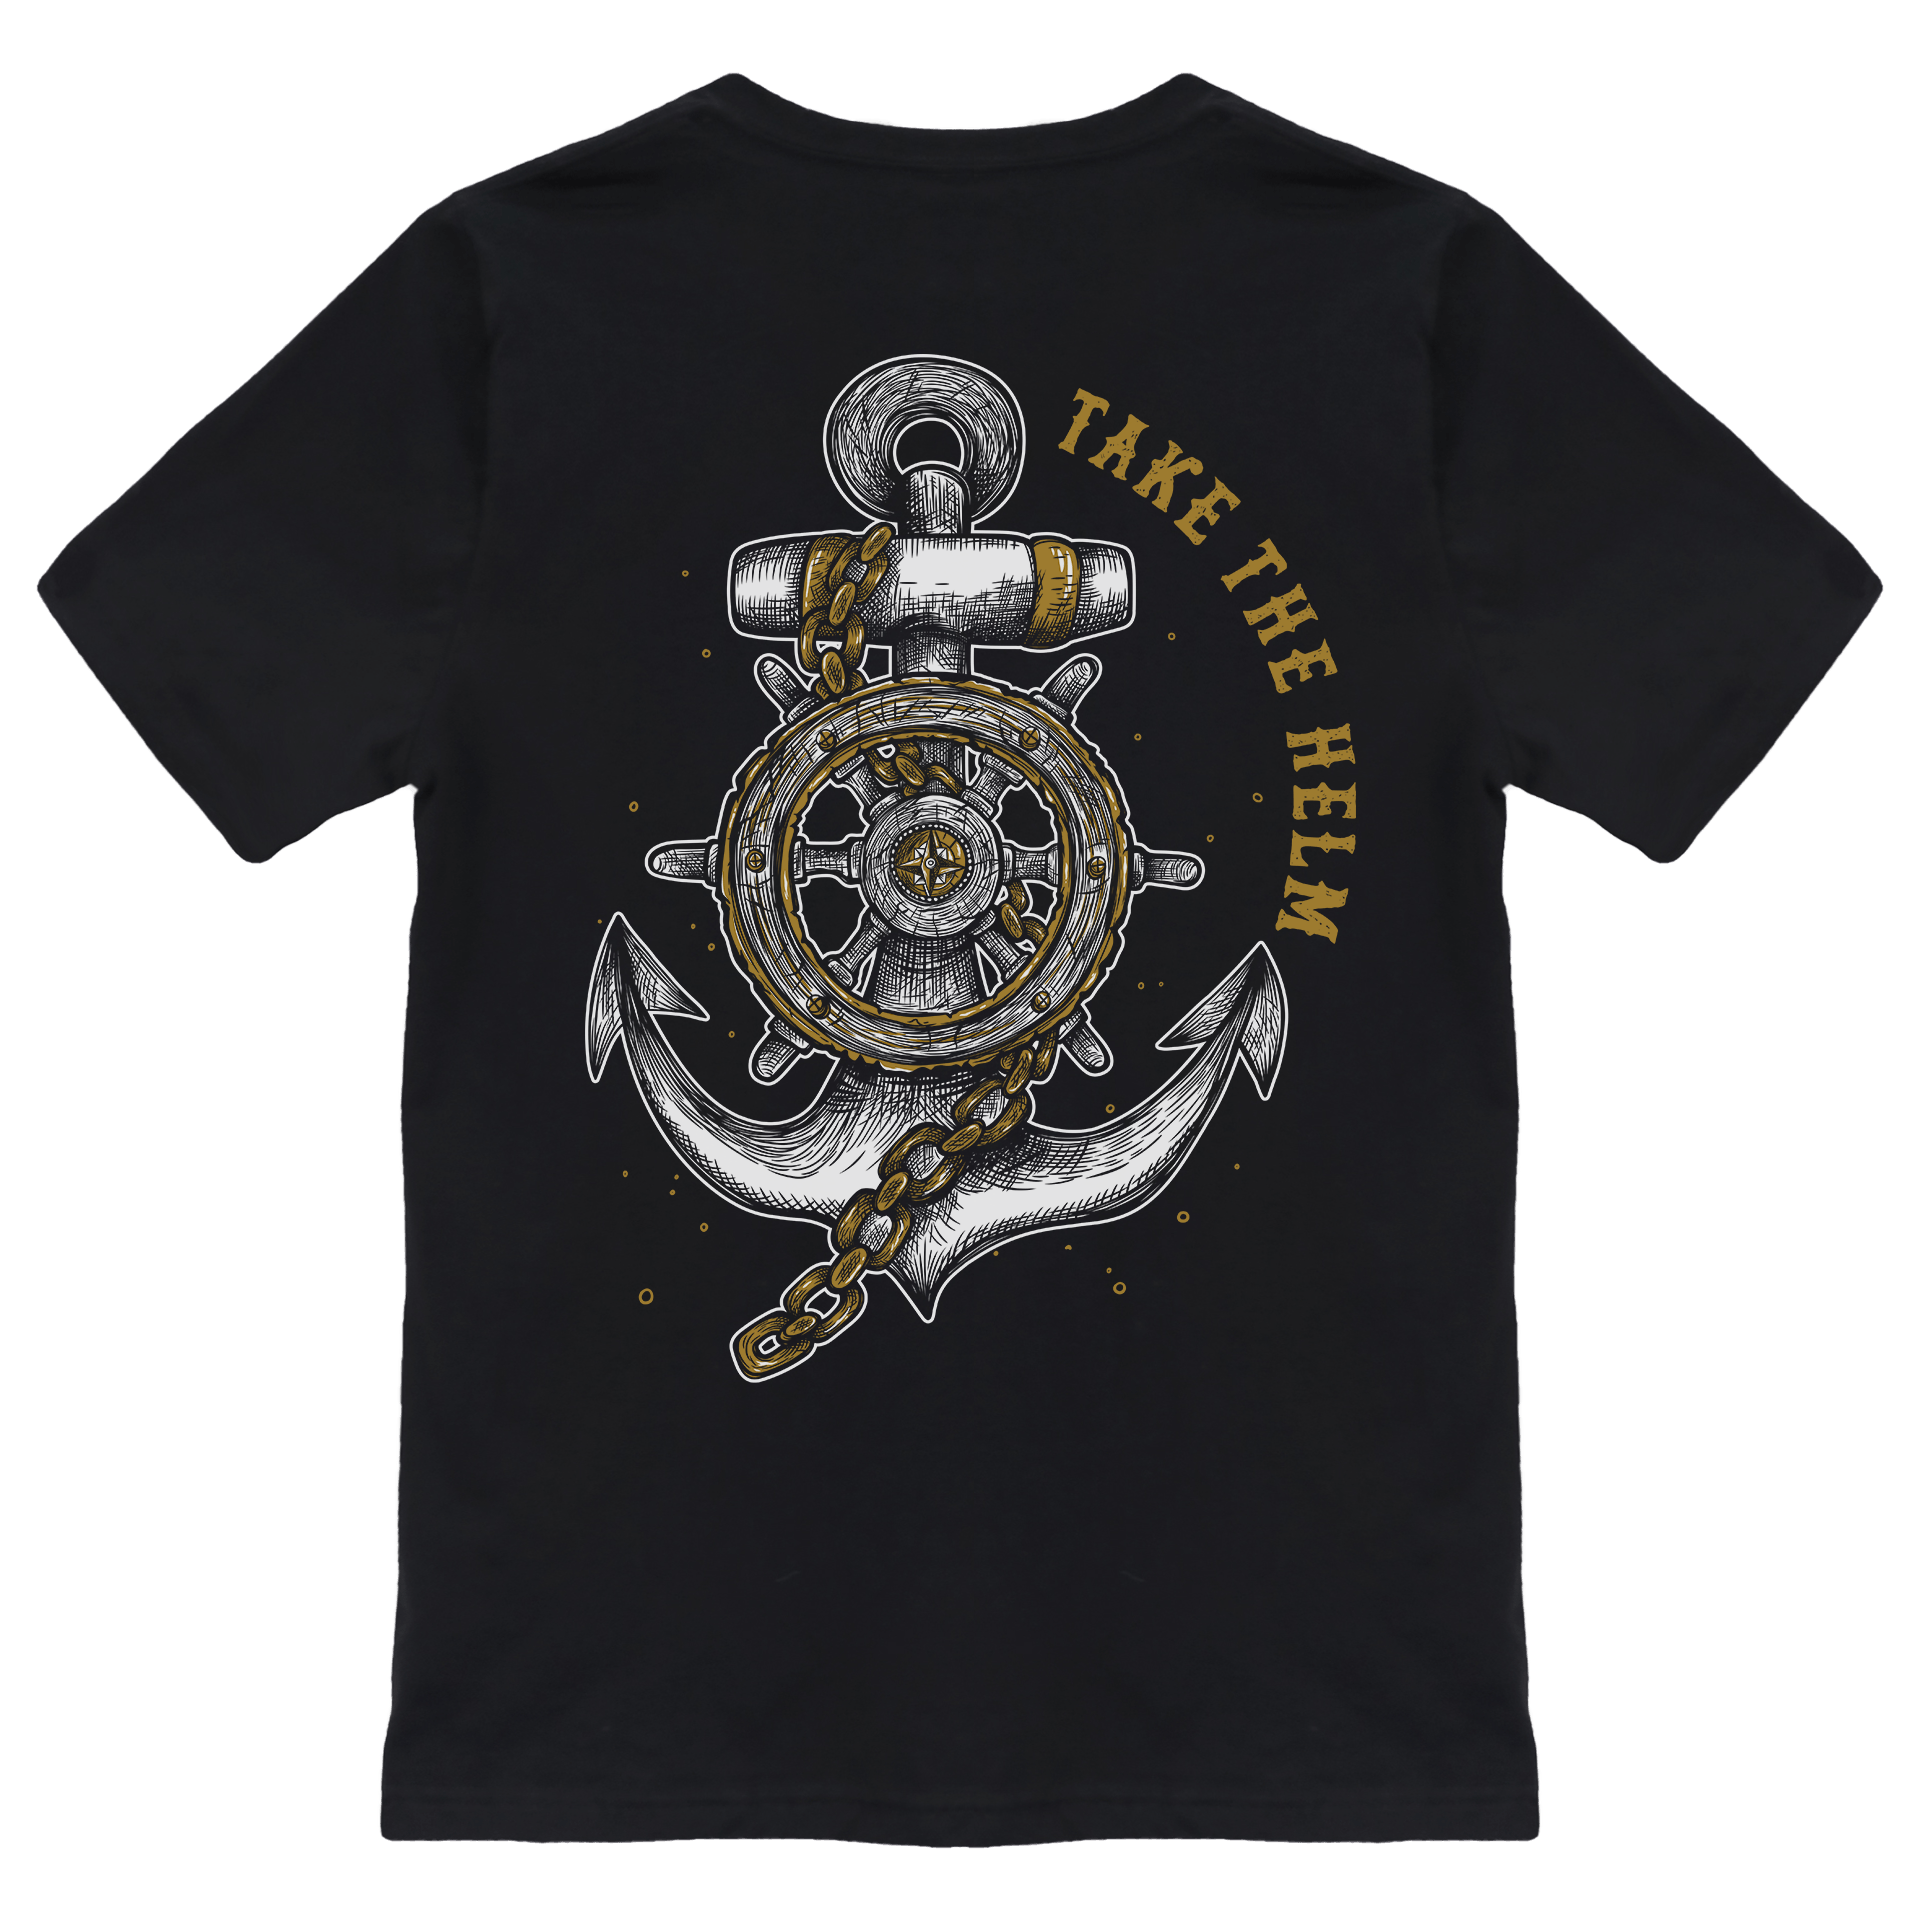 Take The Helm GOLD T-Shirt – Relentless Betrayal